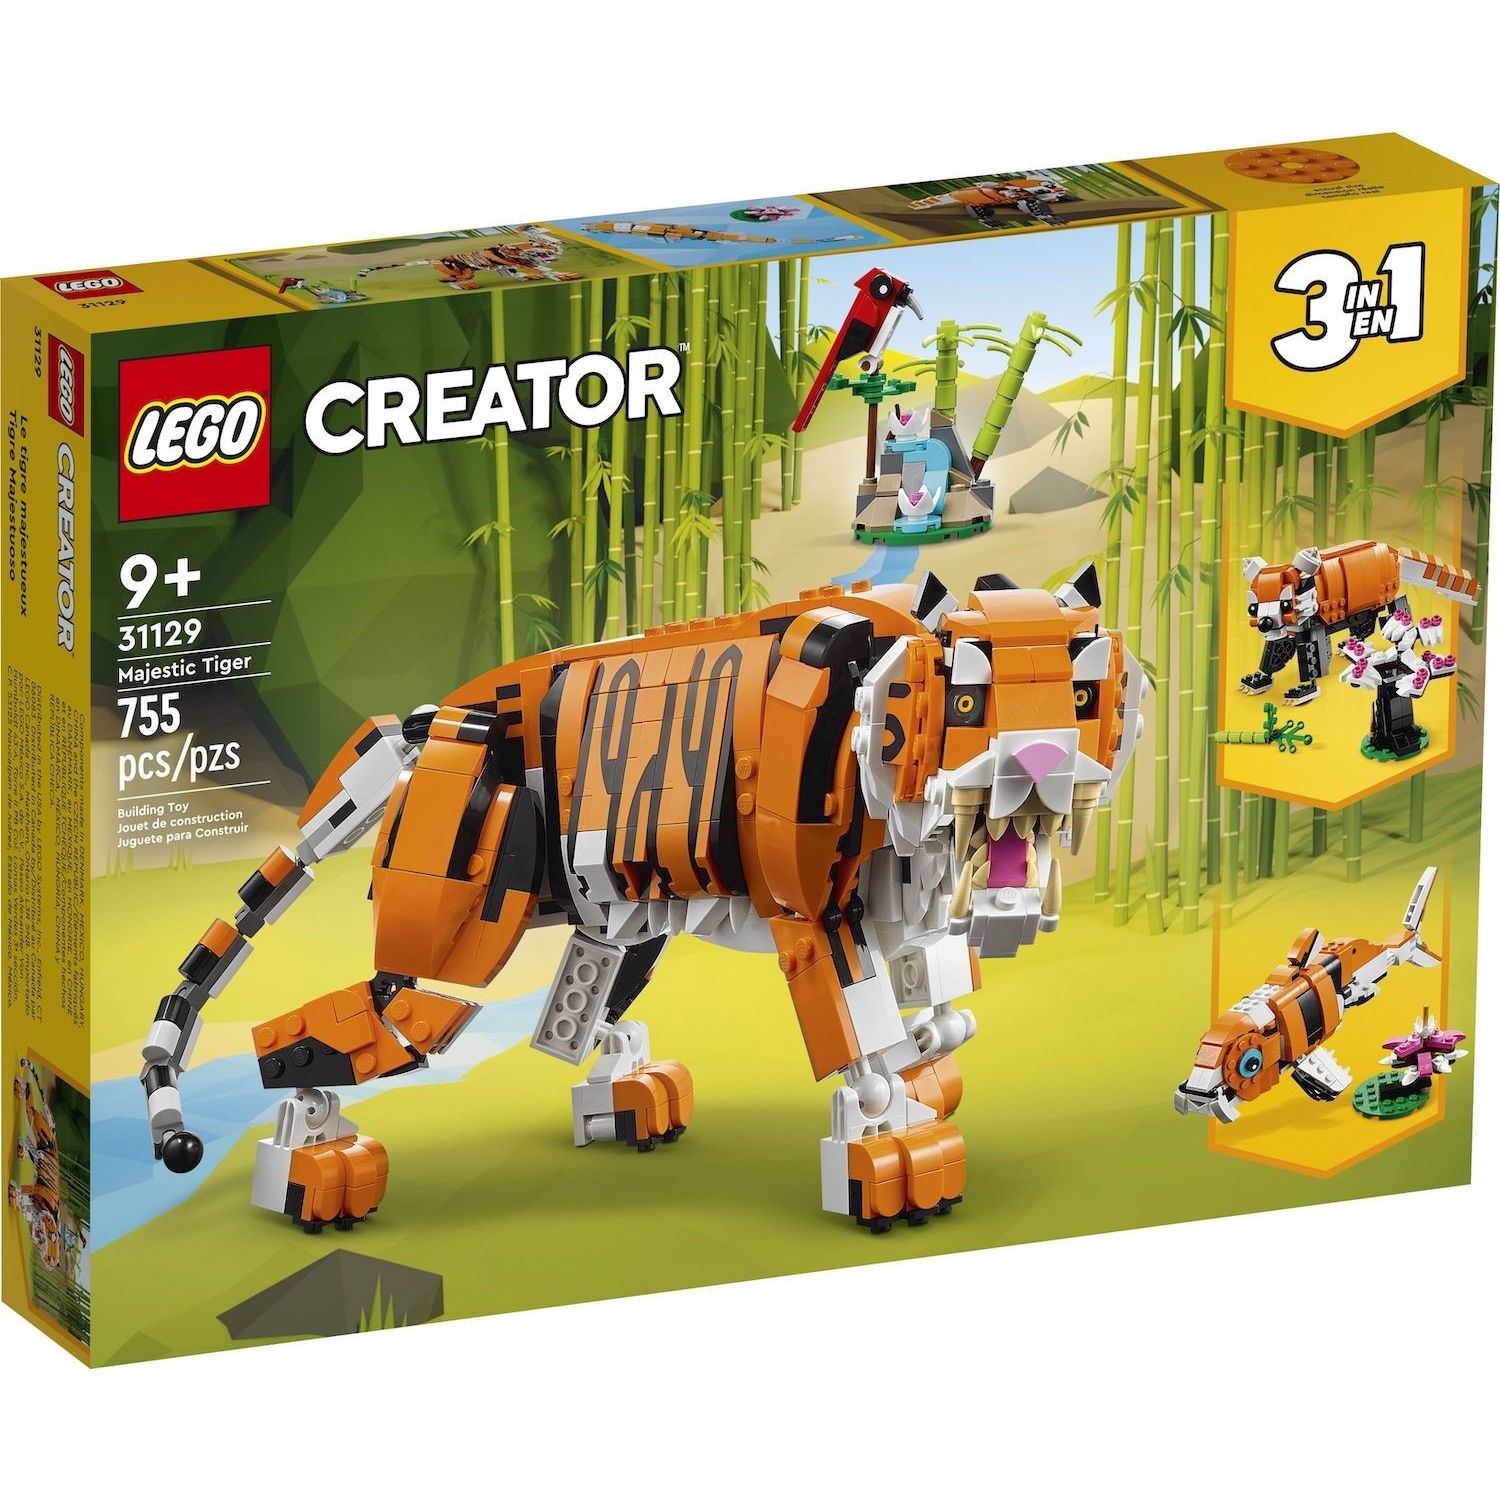 LEGO CREATOR 31129 GROTE TIJGER